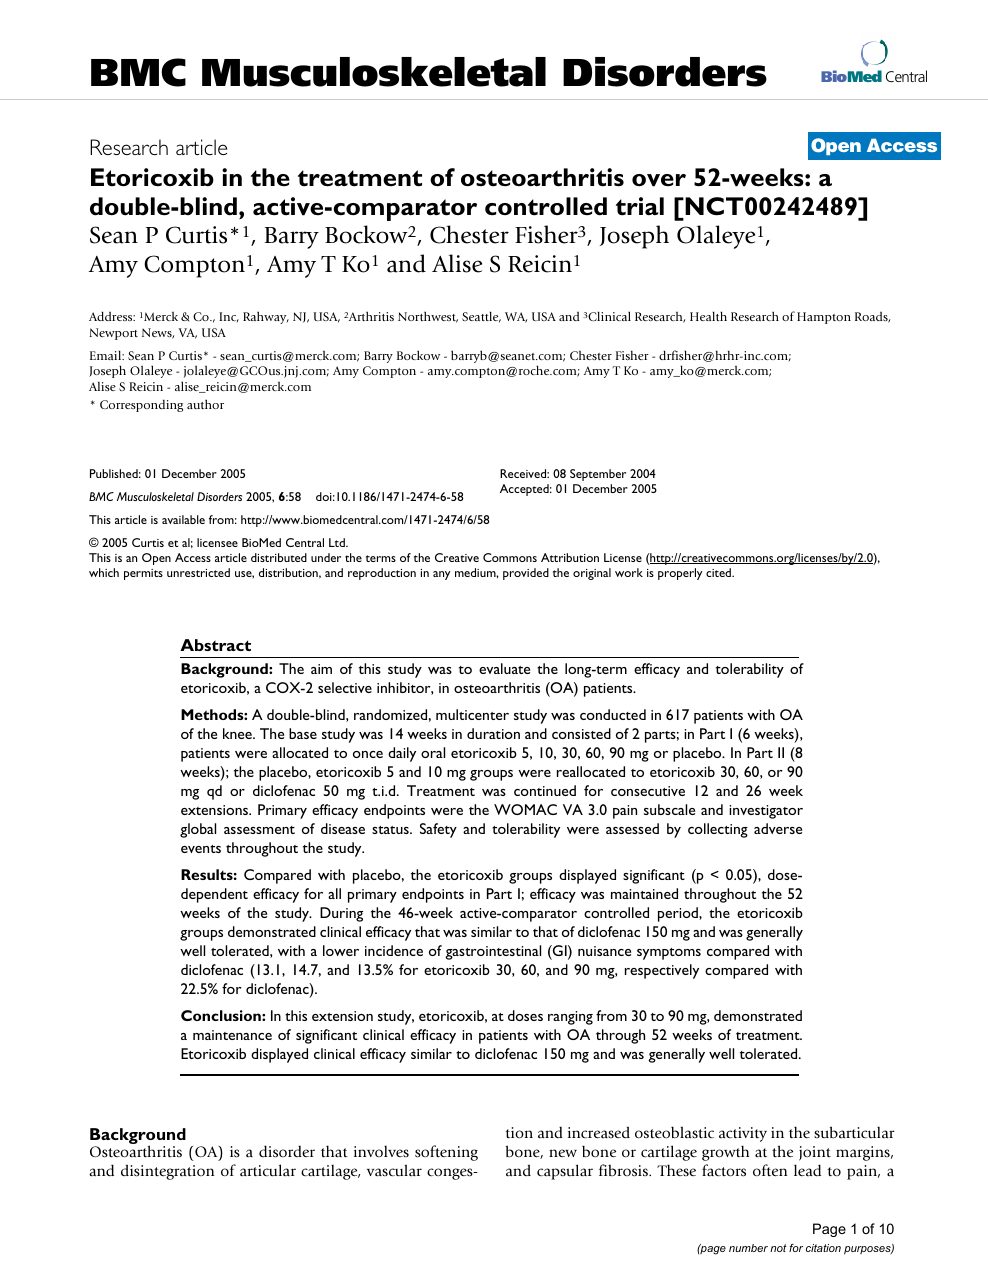 Etoricoxib in the treatment of osteoarthritis over 52.